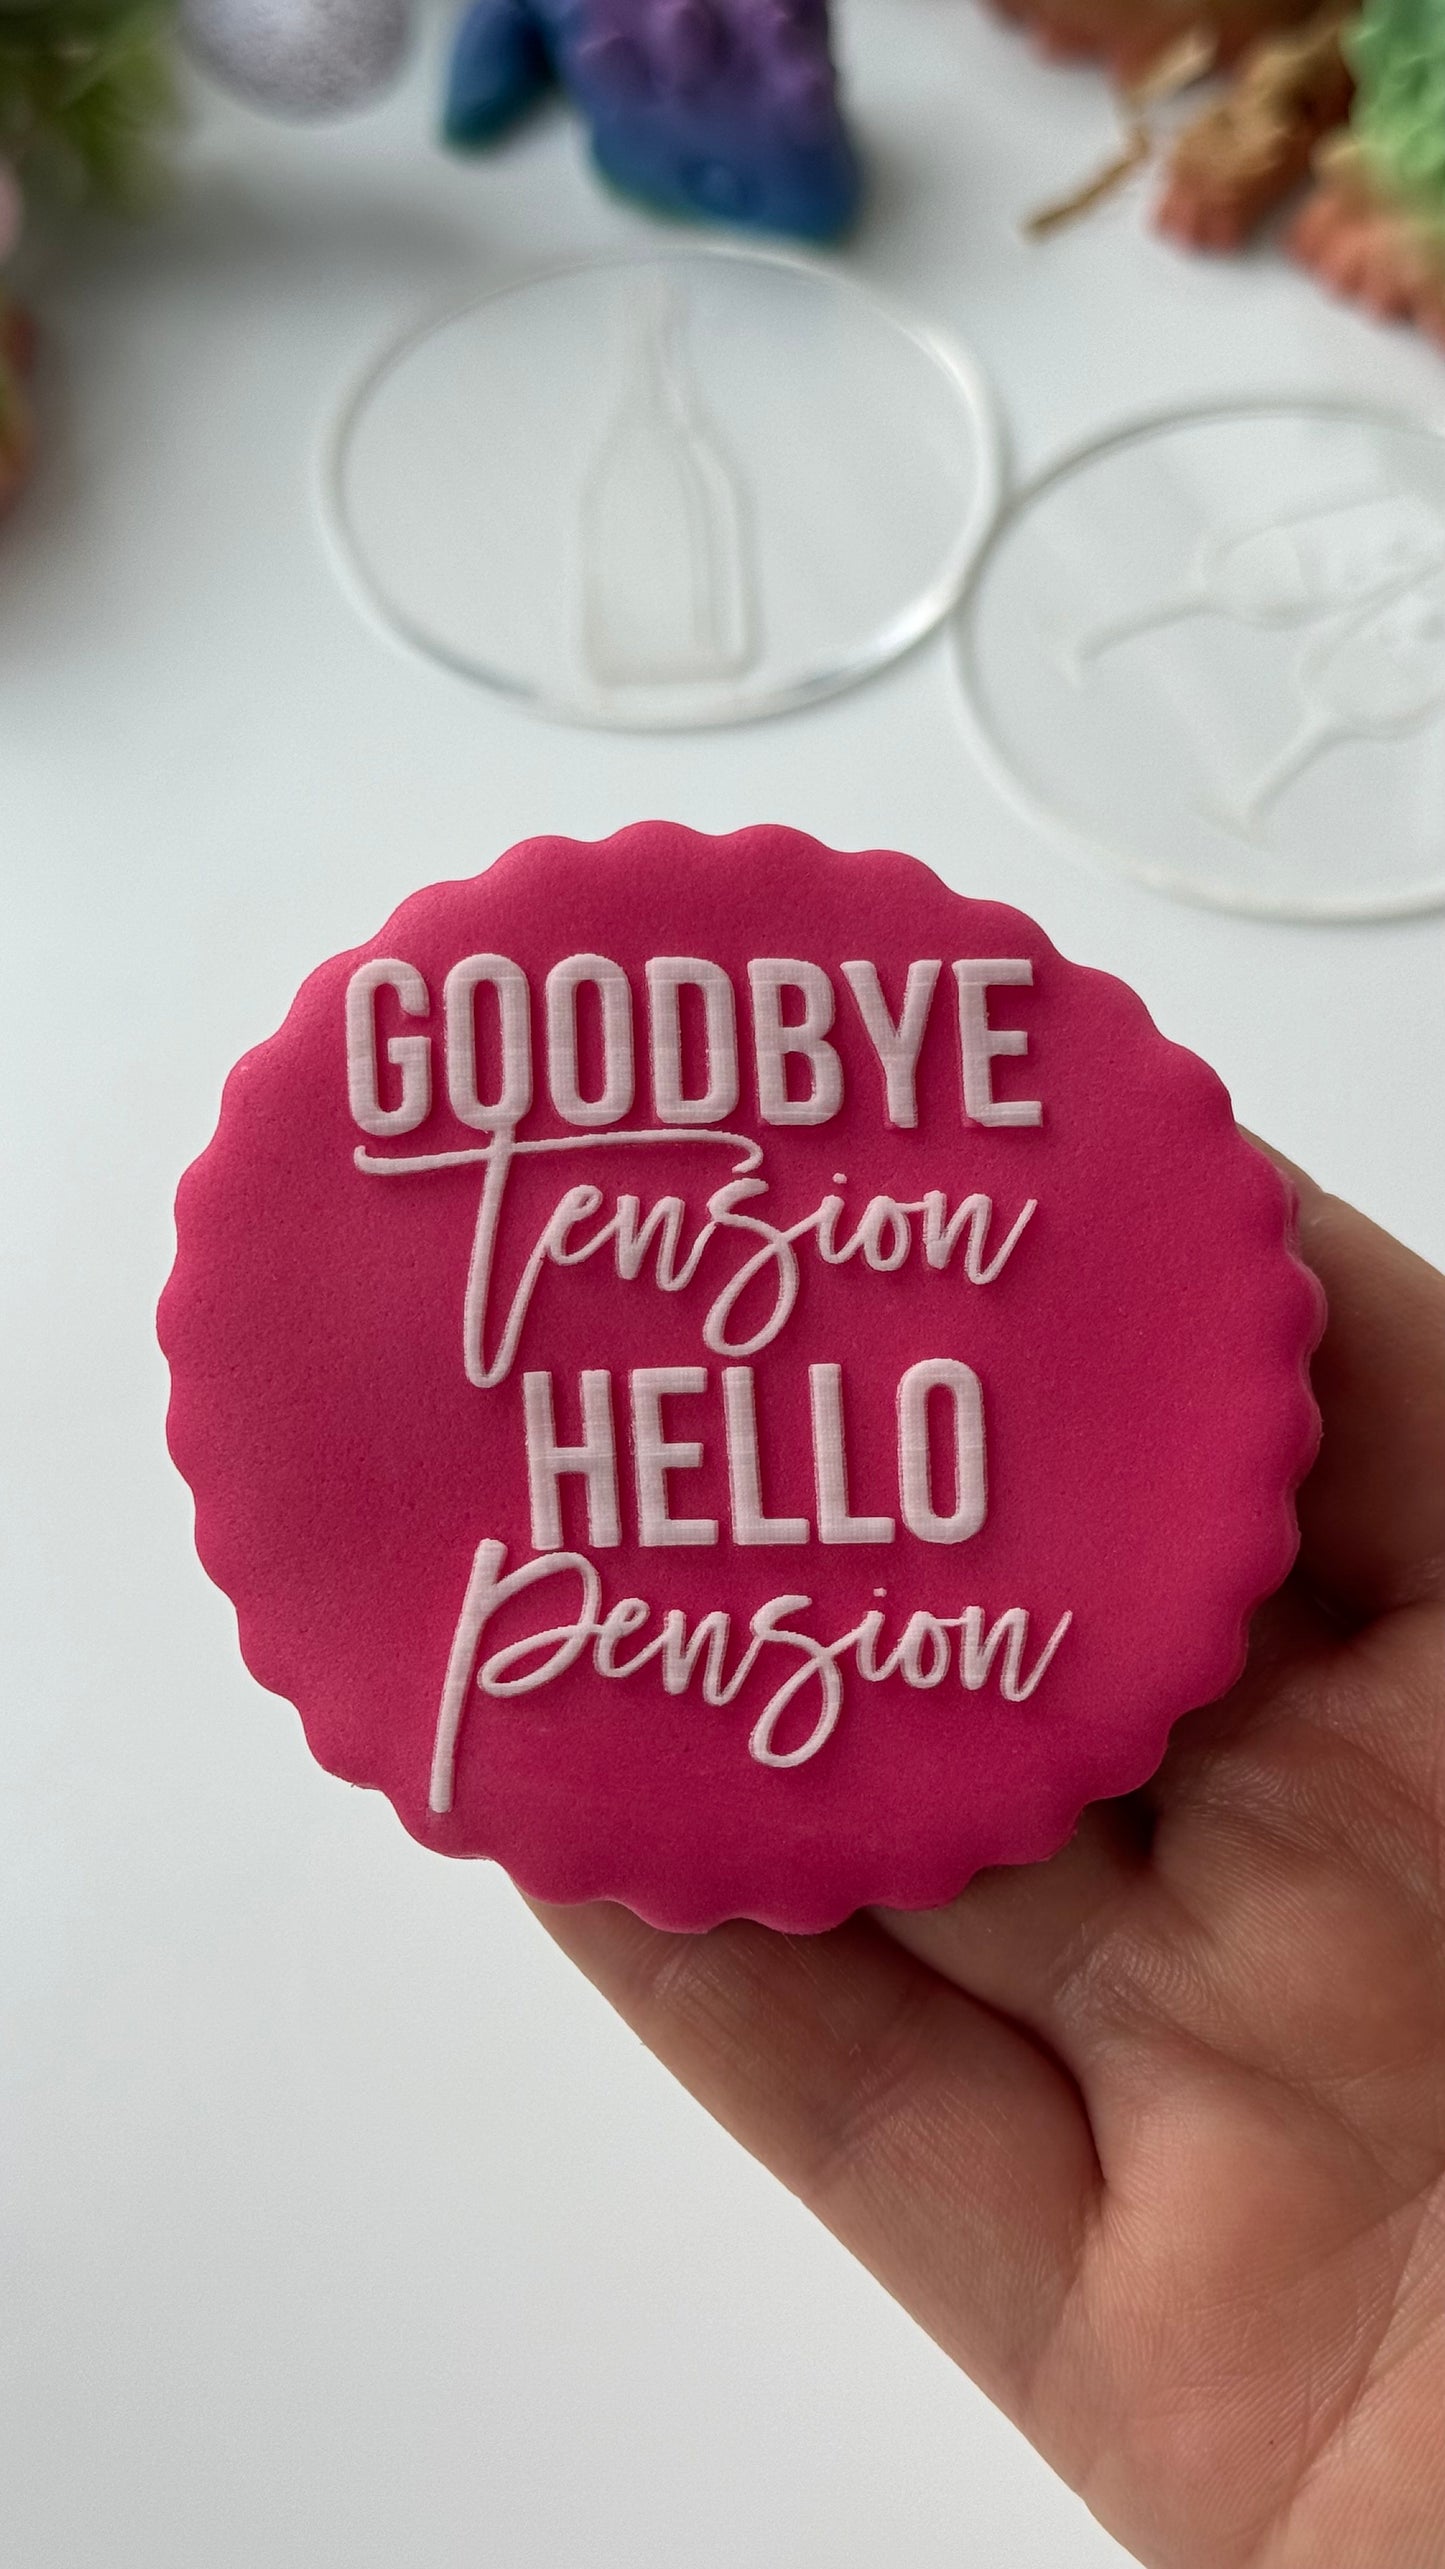 Goodbye tension Hello Pension - retirement theme - deboss